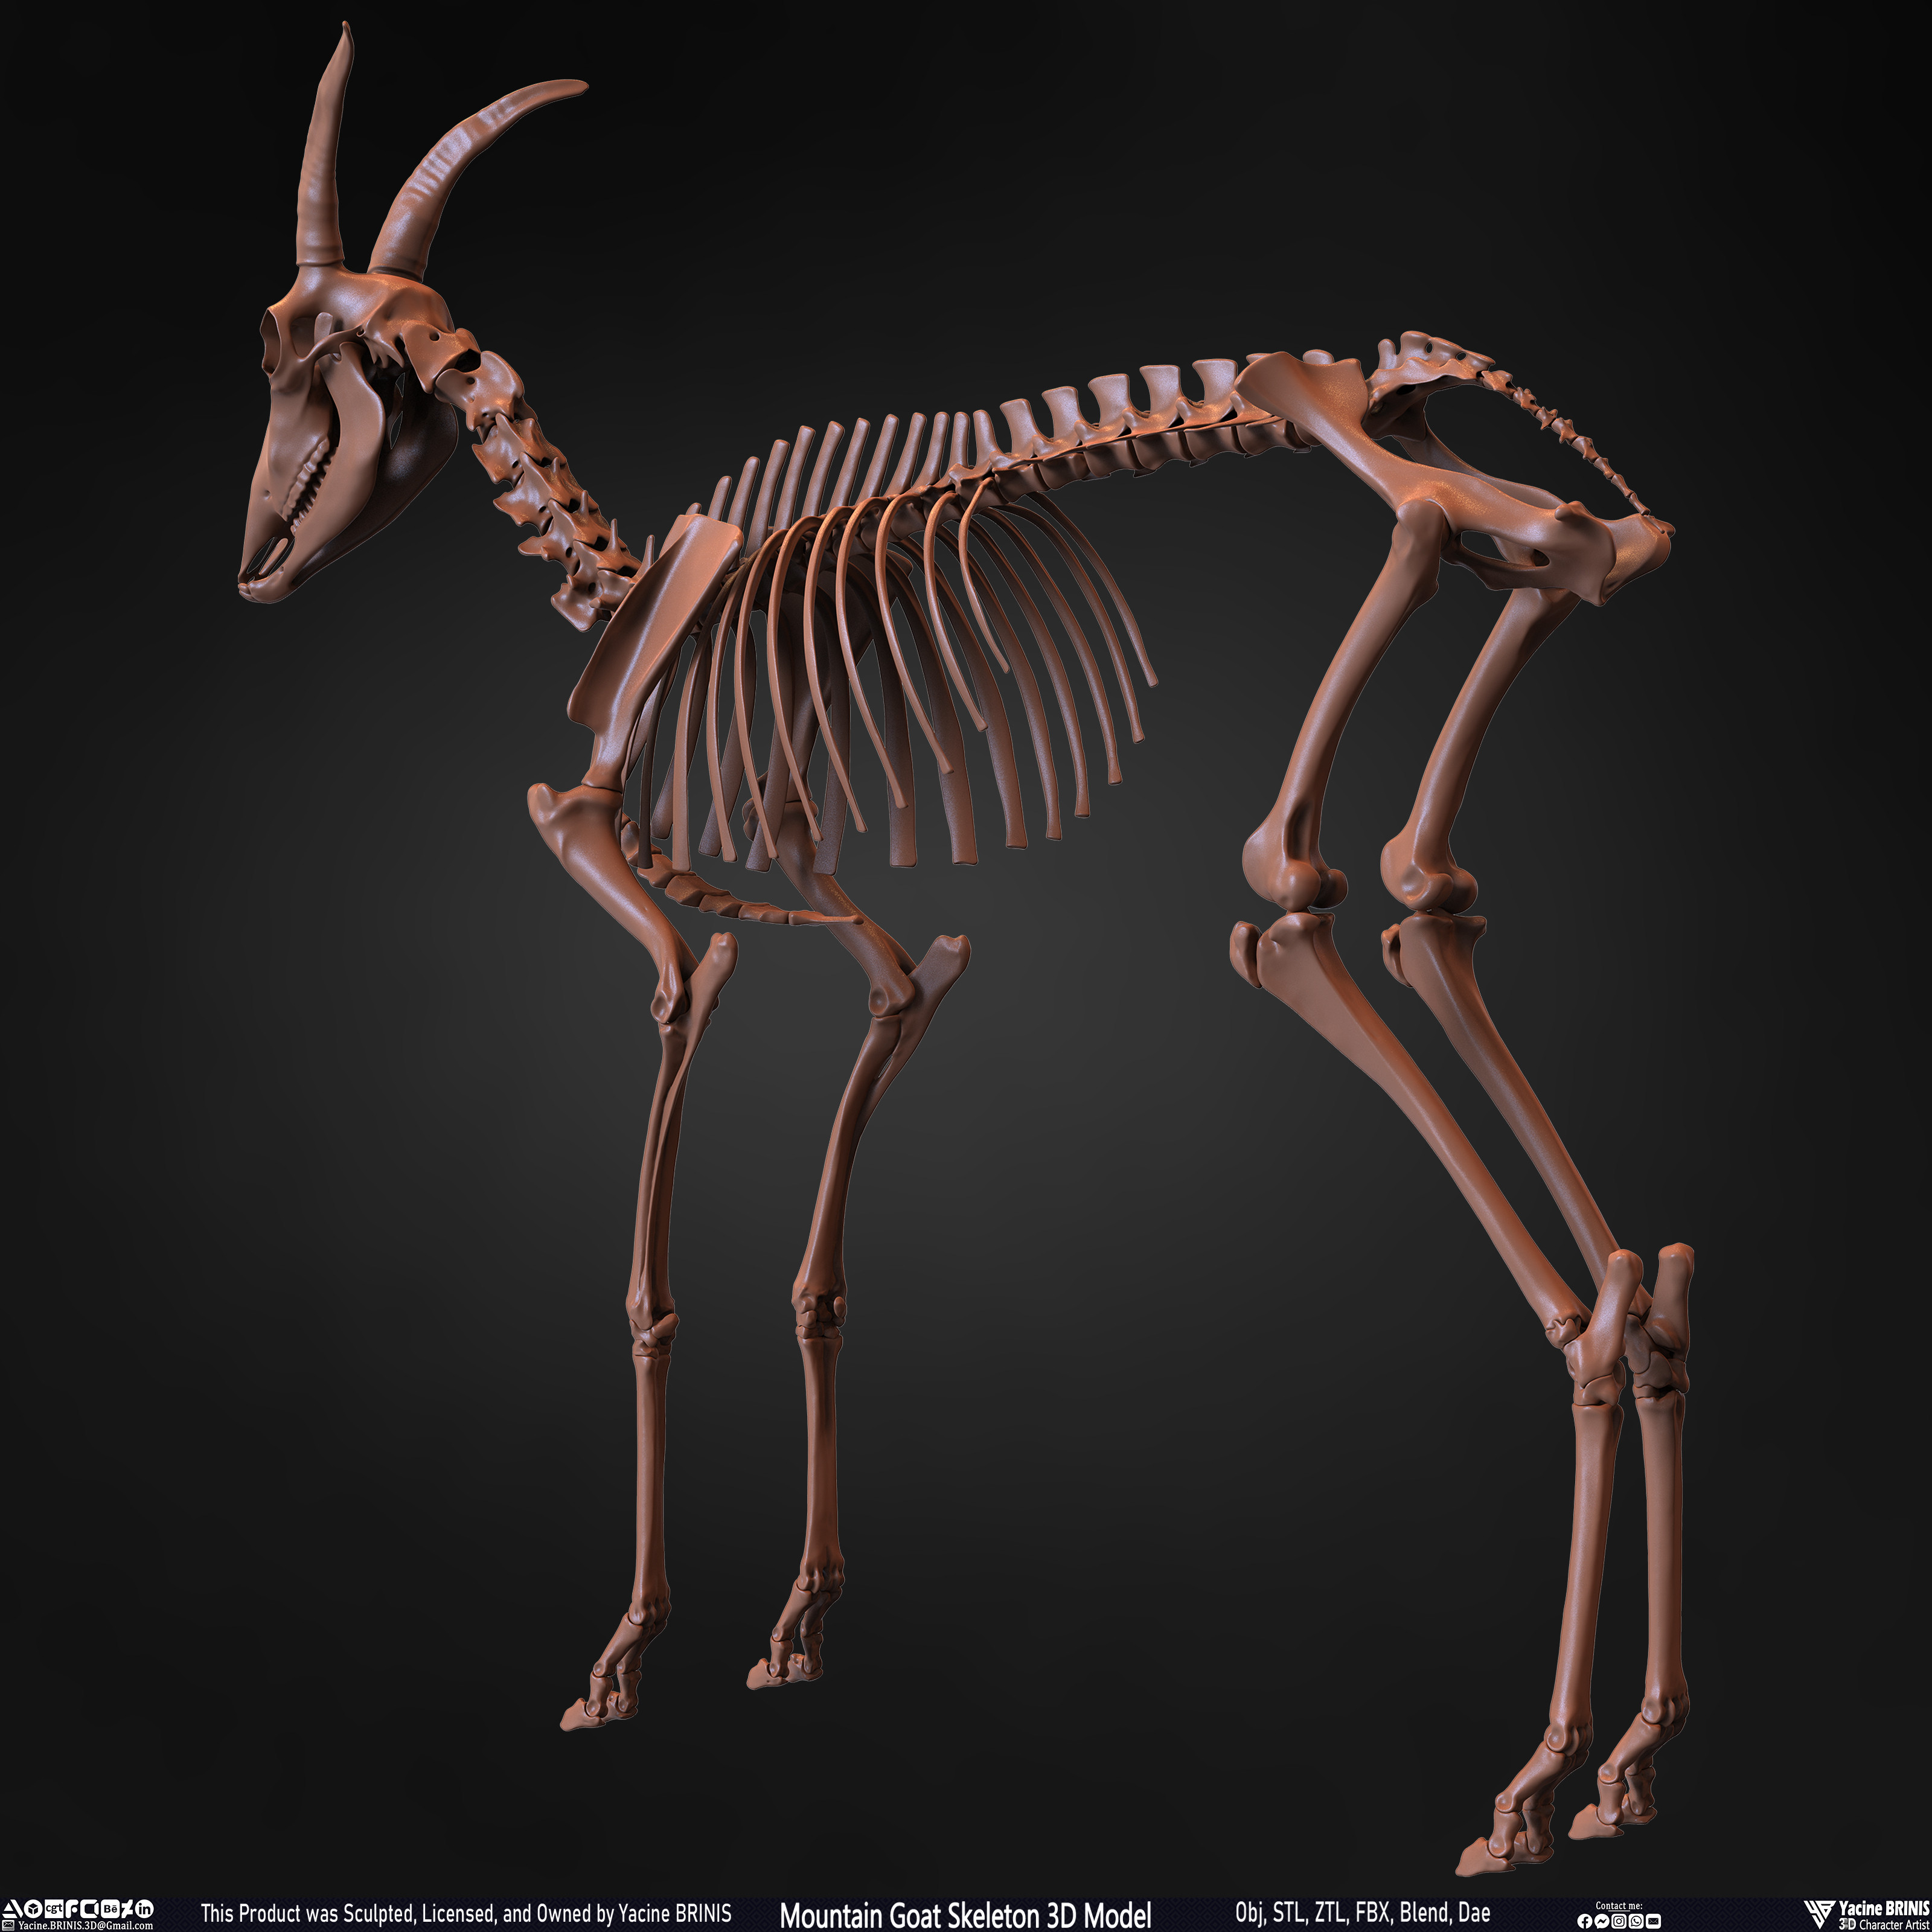 Mountain Goat Skeleton 3D Model Sculpted by Yacine BRINIS Set 013